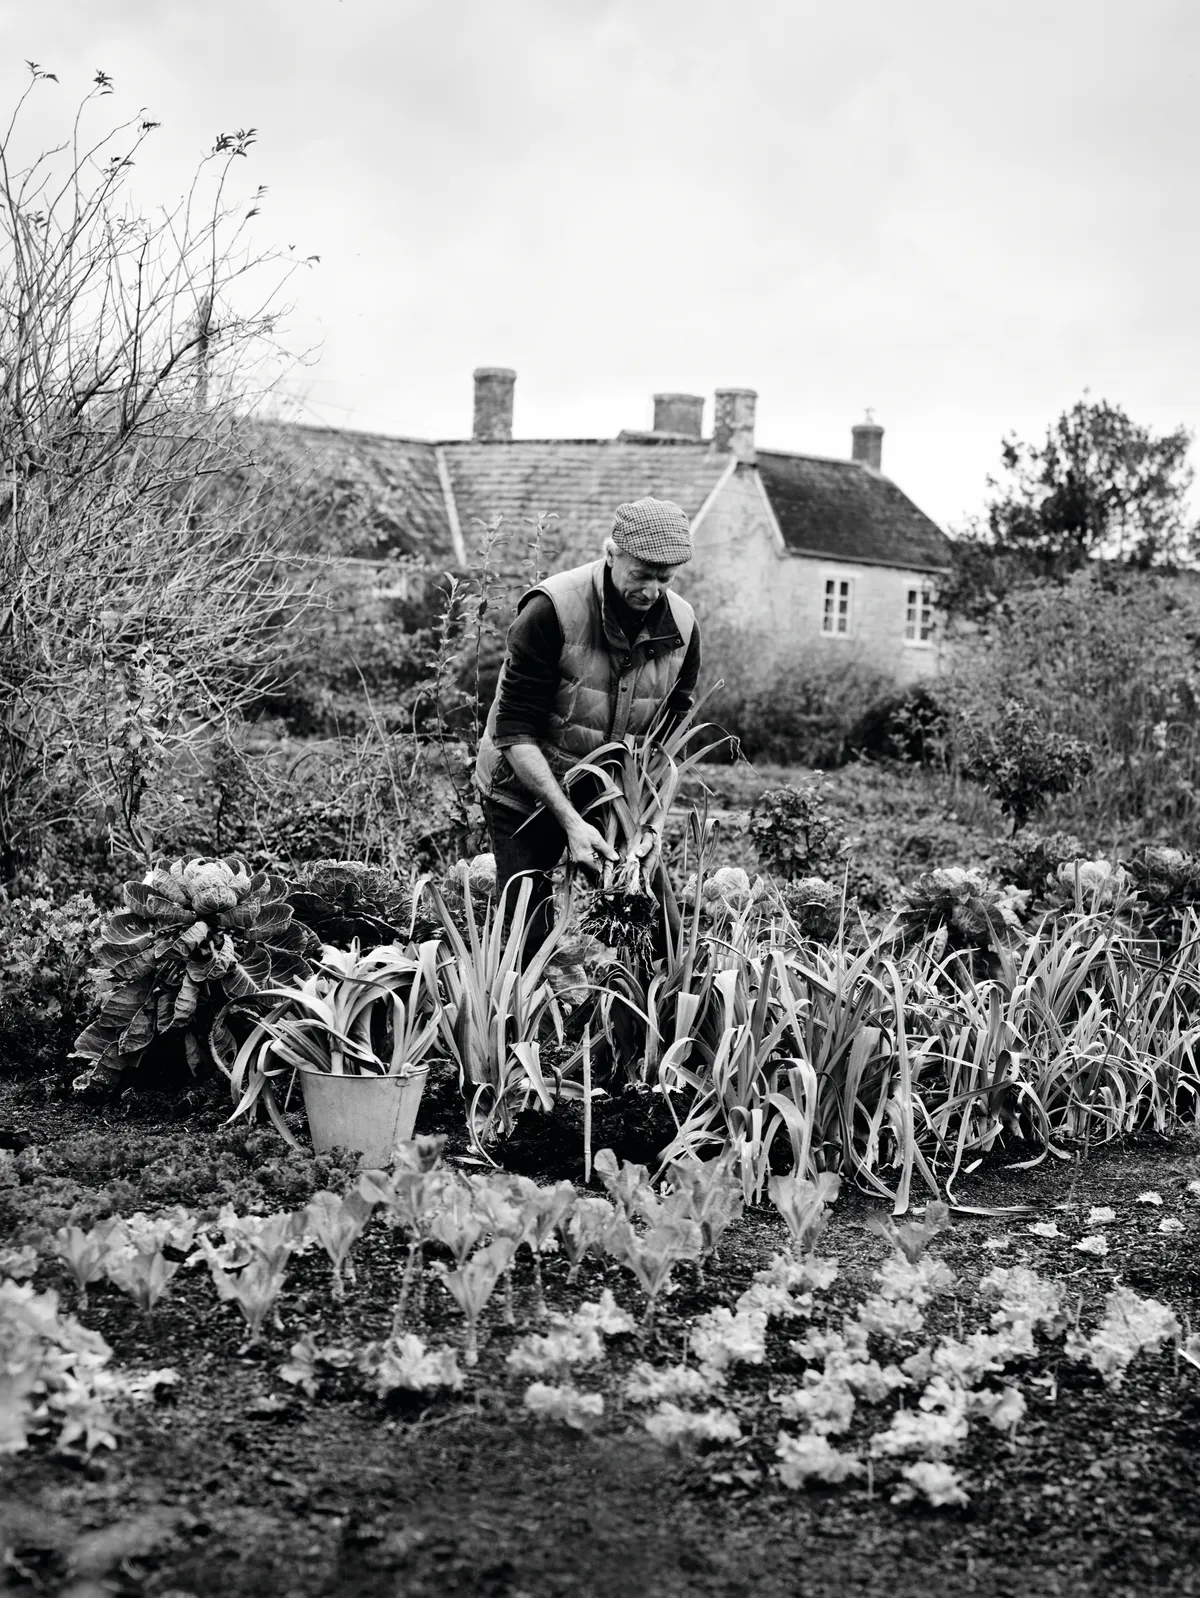 No-dig gardener Charles Dowding in his quarter-acre organic vegetable garden in Somerset